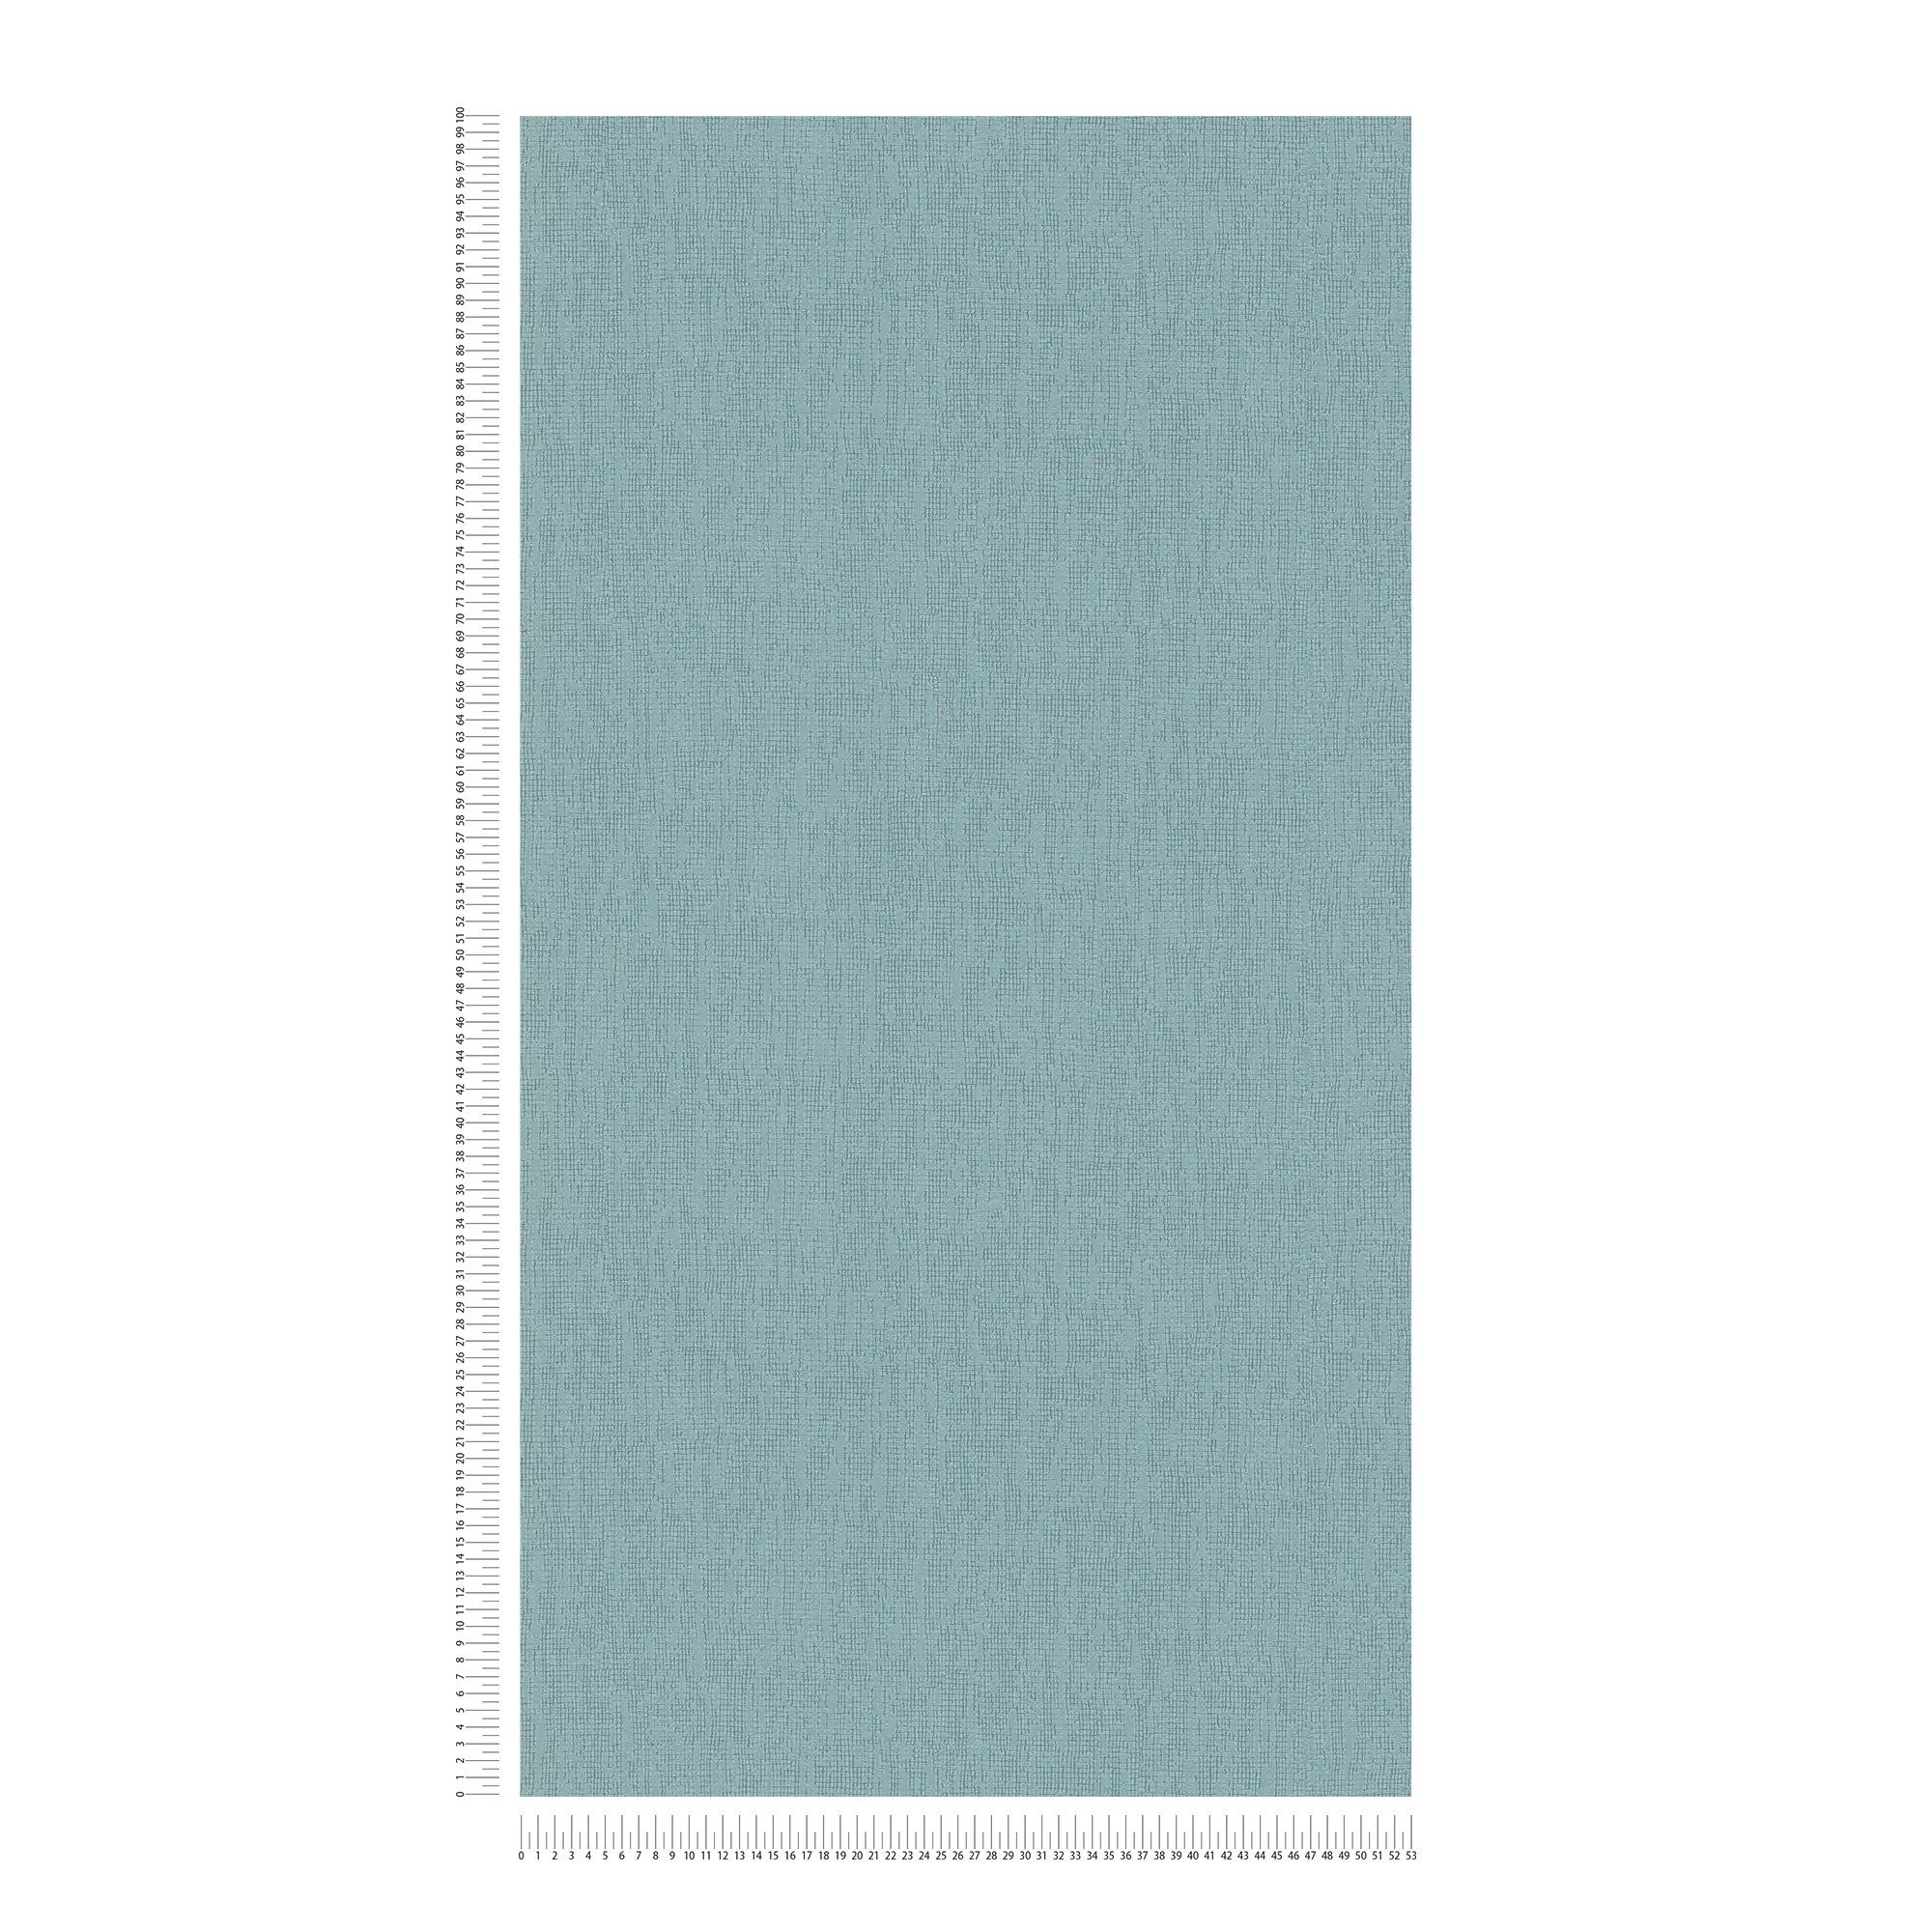             Light blue wallpaper plain with texture details, Scandi styles
        